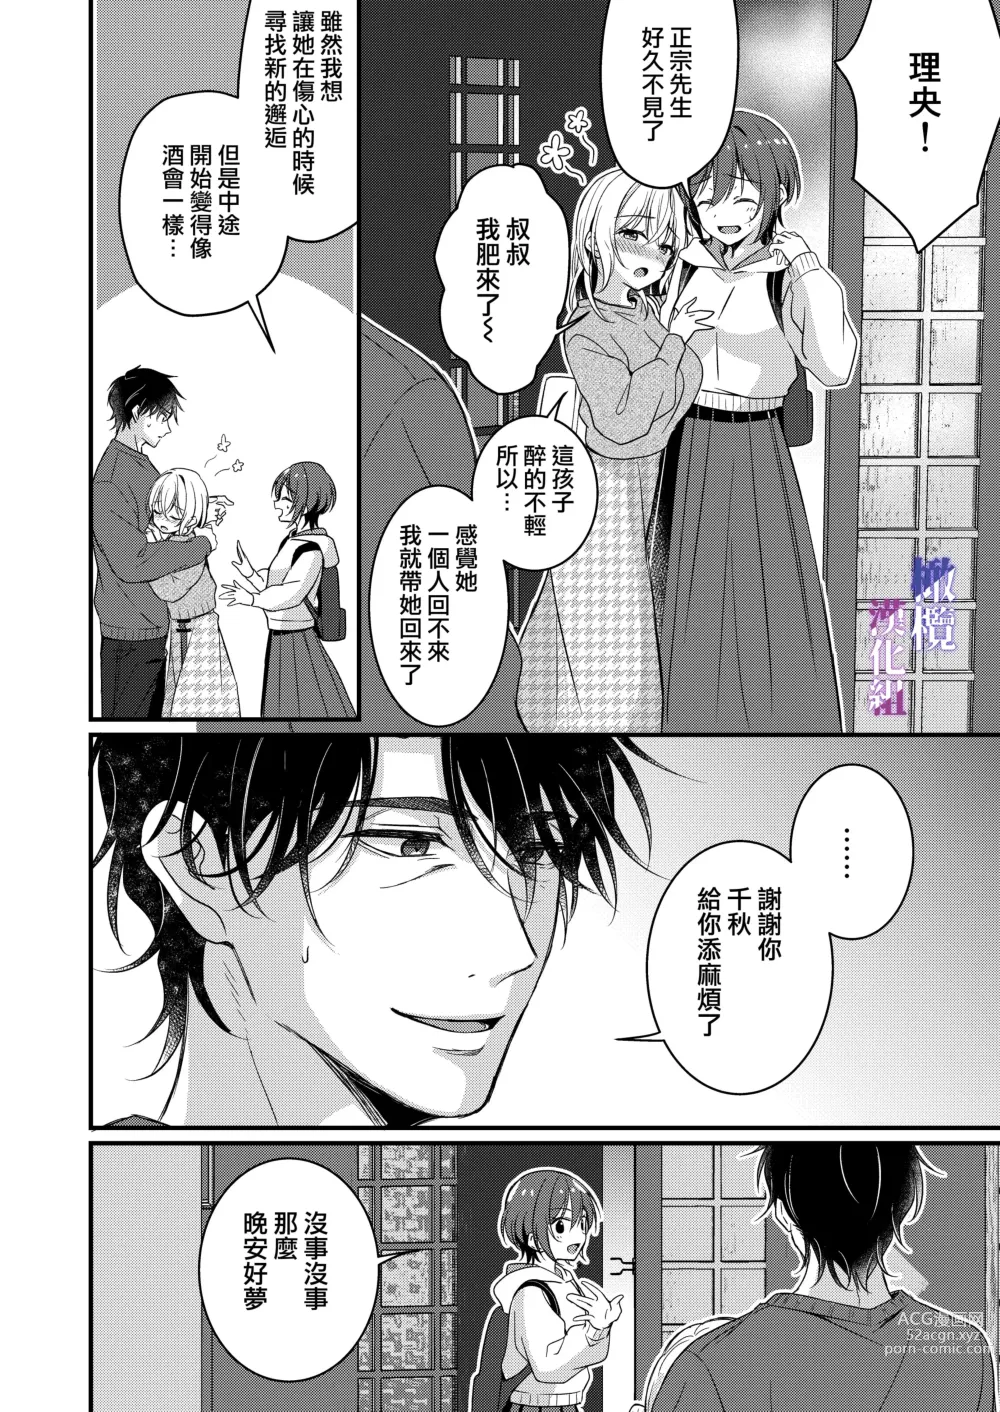 Page 21 of doujinshi 梦见了与叔叔淫乱的梦